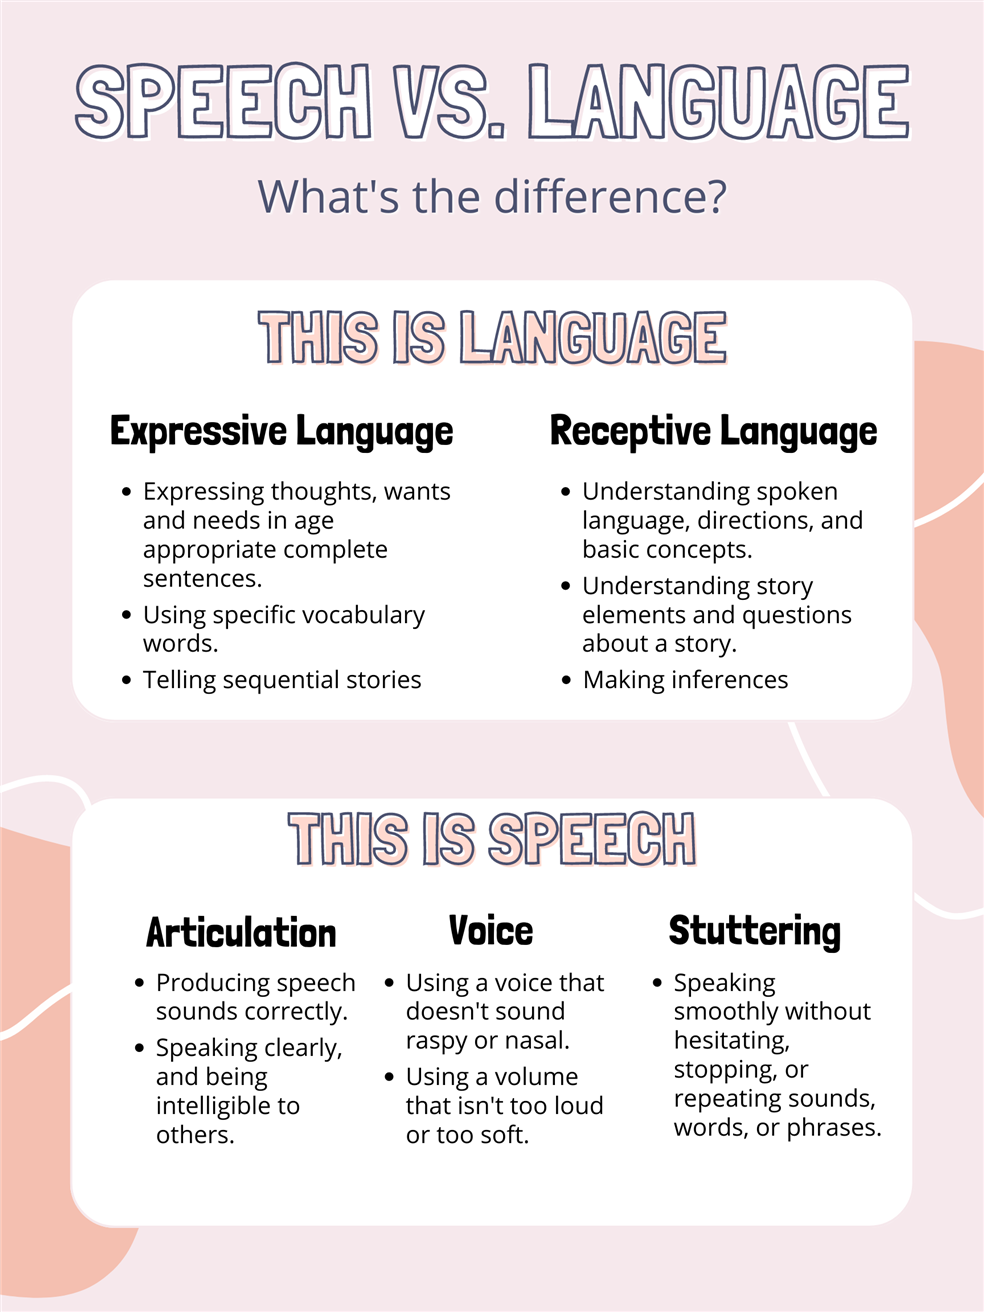 Speech v. Language 